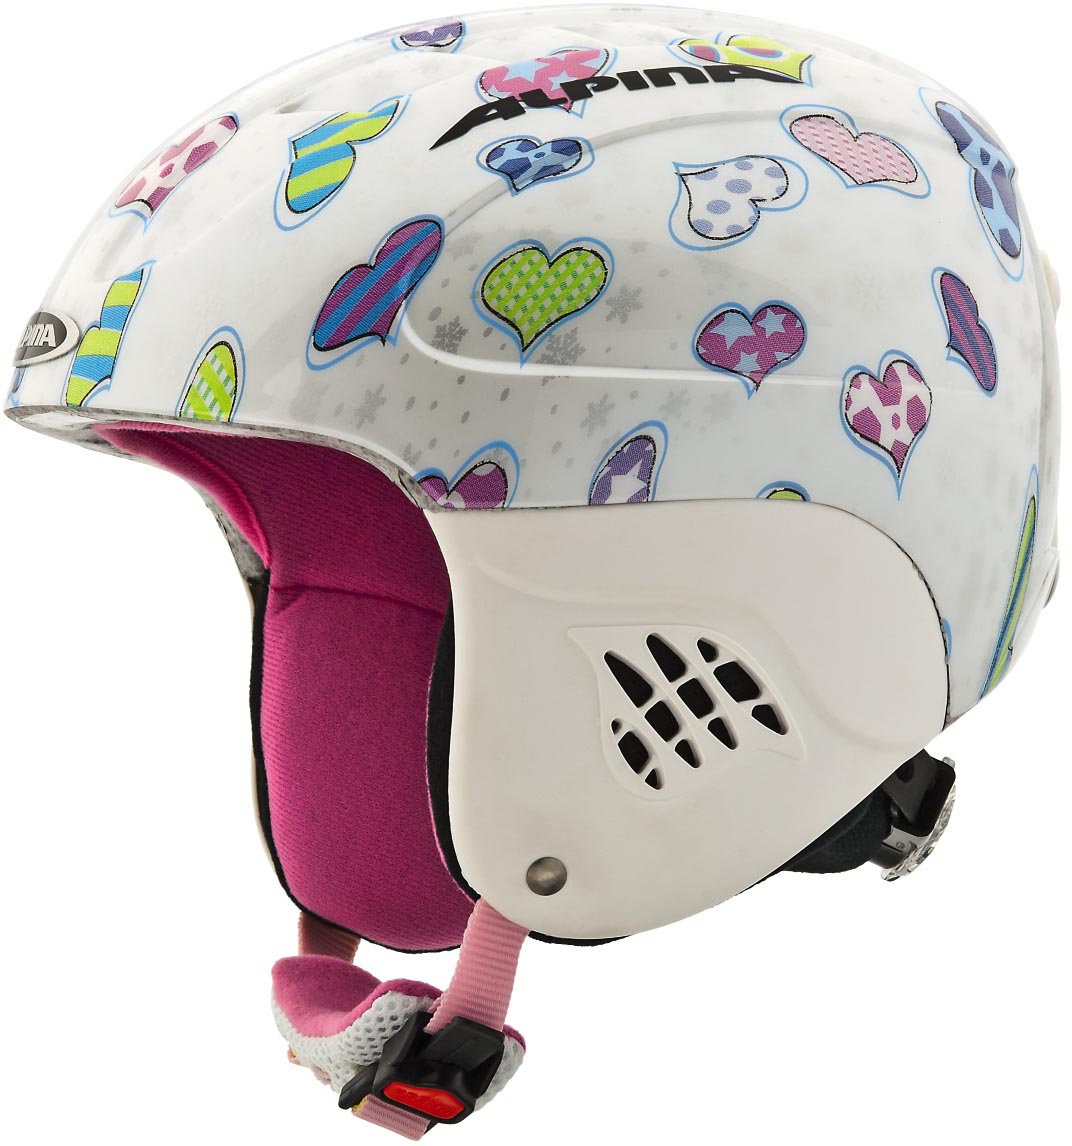 Children's ski helmet